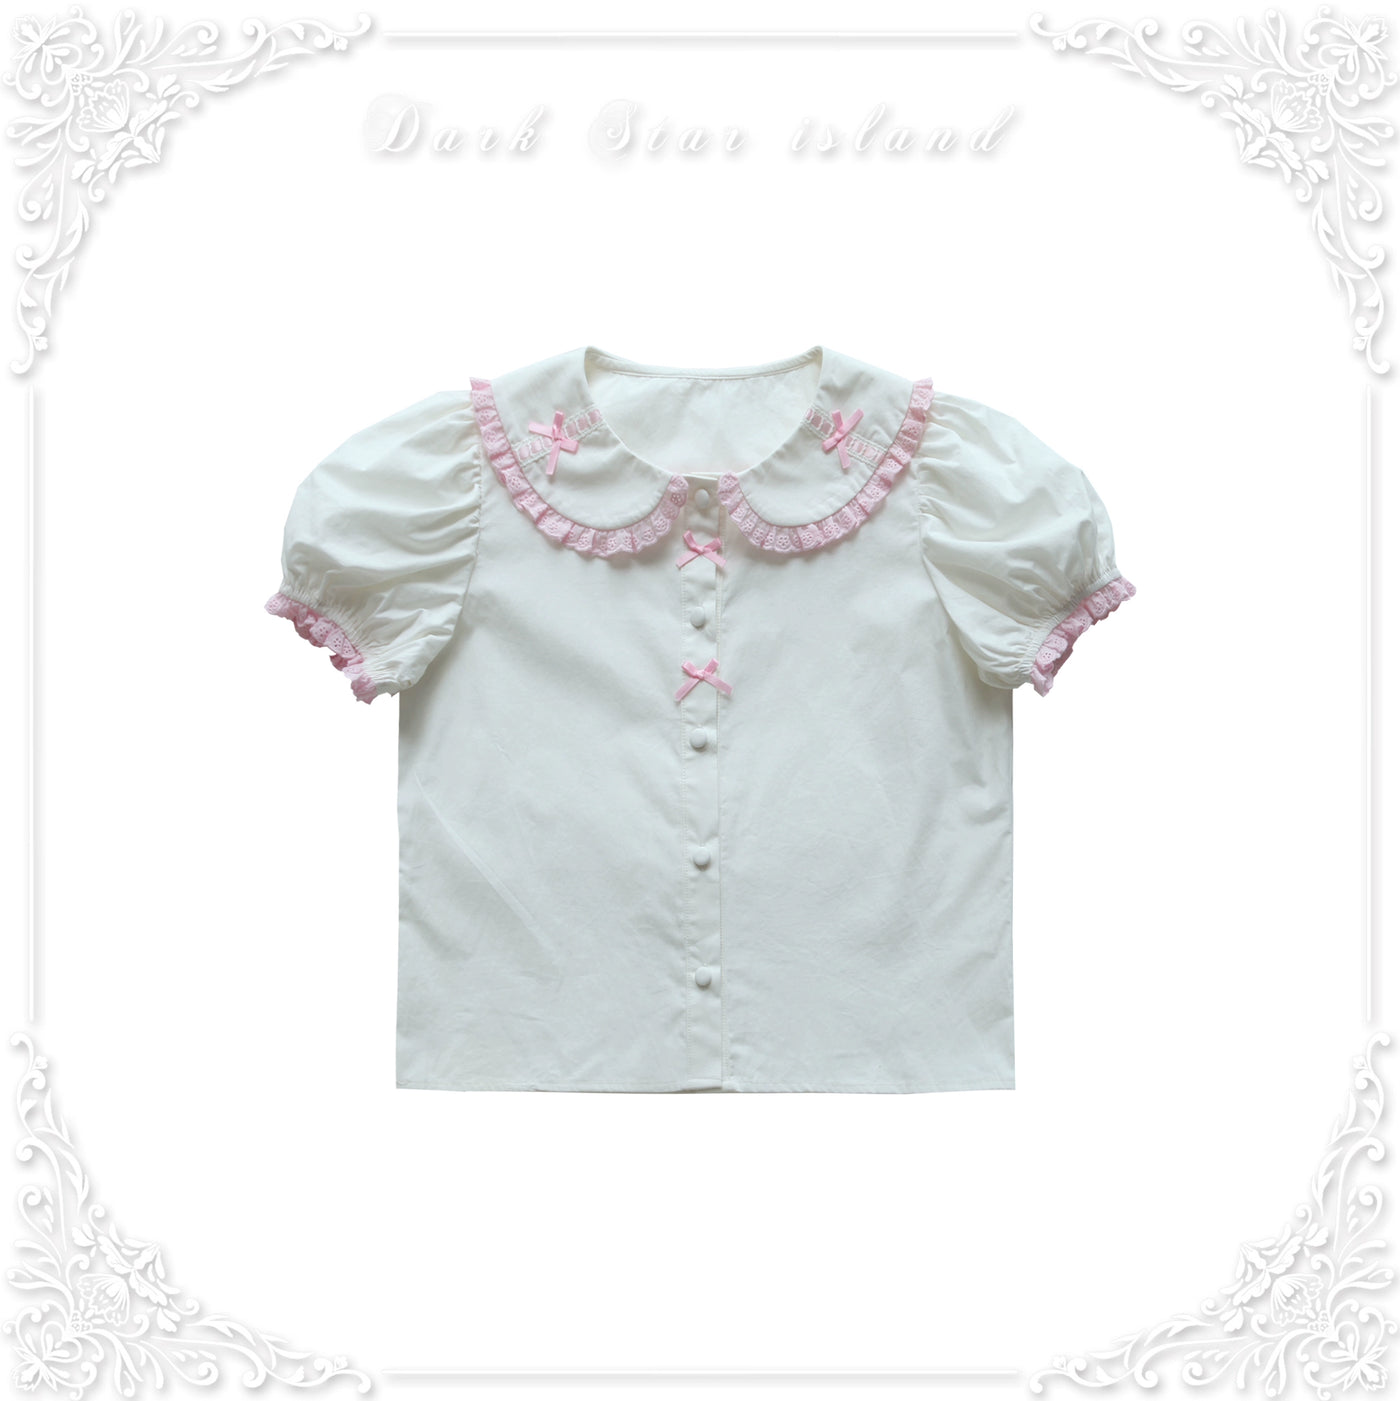 Dark Star Island~Kawaii Lolita Dress OP Blouse SK Set Free size Powder-white pure cotton bubble sleeve shirt 